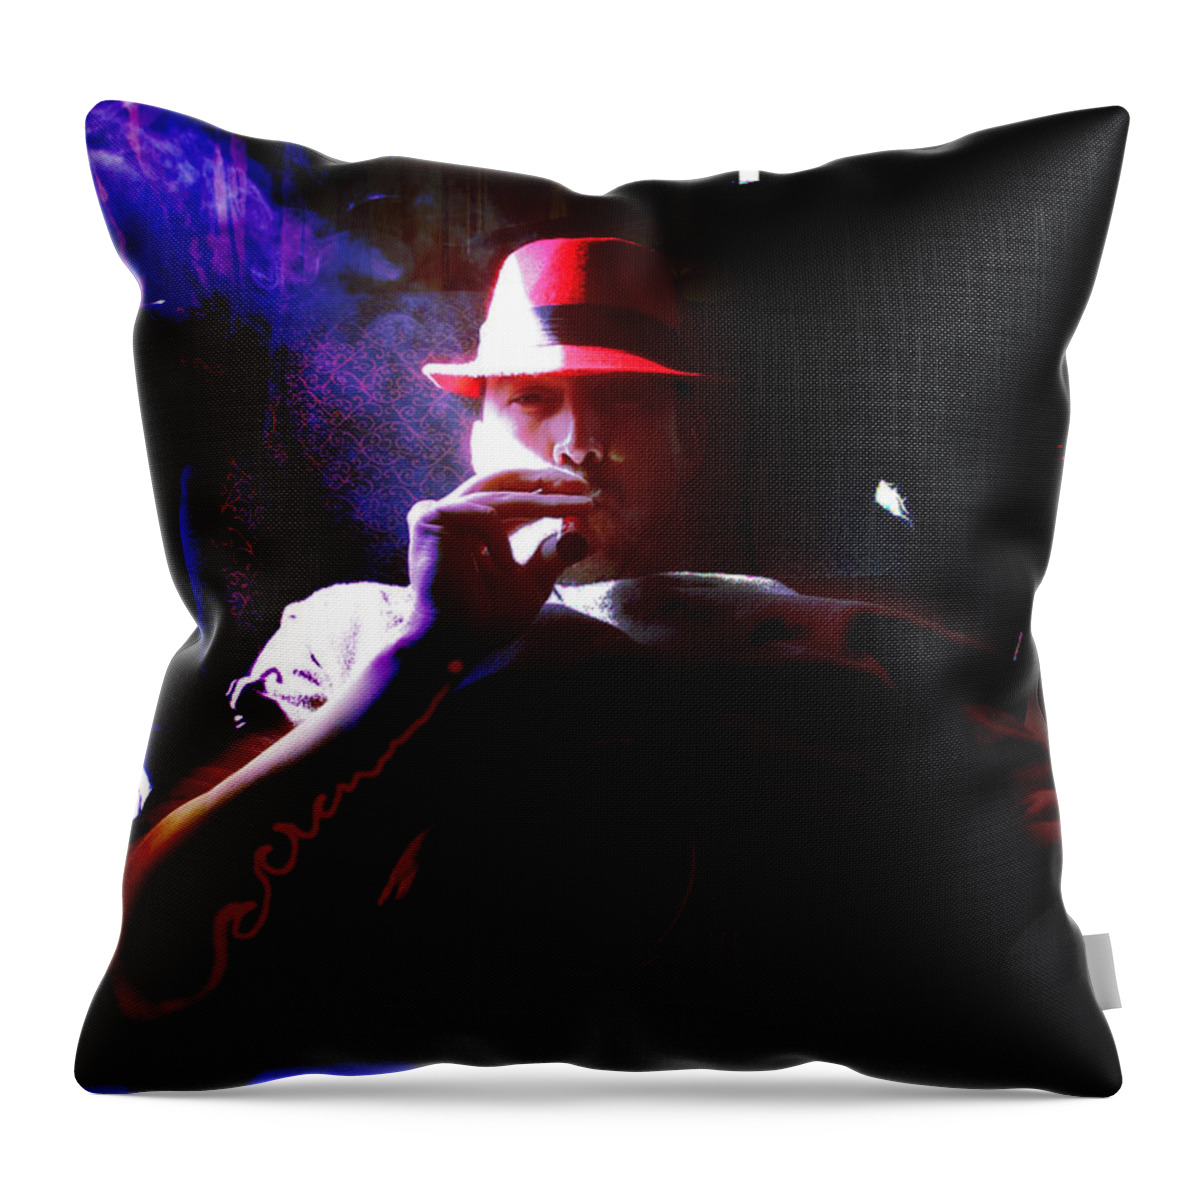  Throw Pillow featuring the photograph Purple Haze Boss by John Gholson